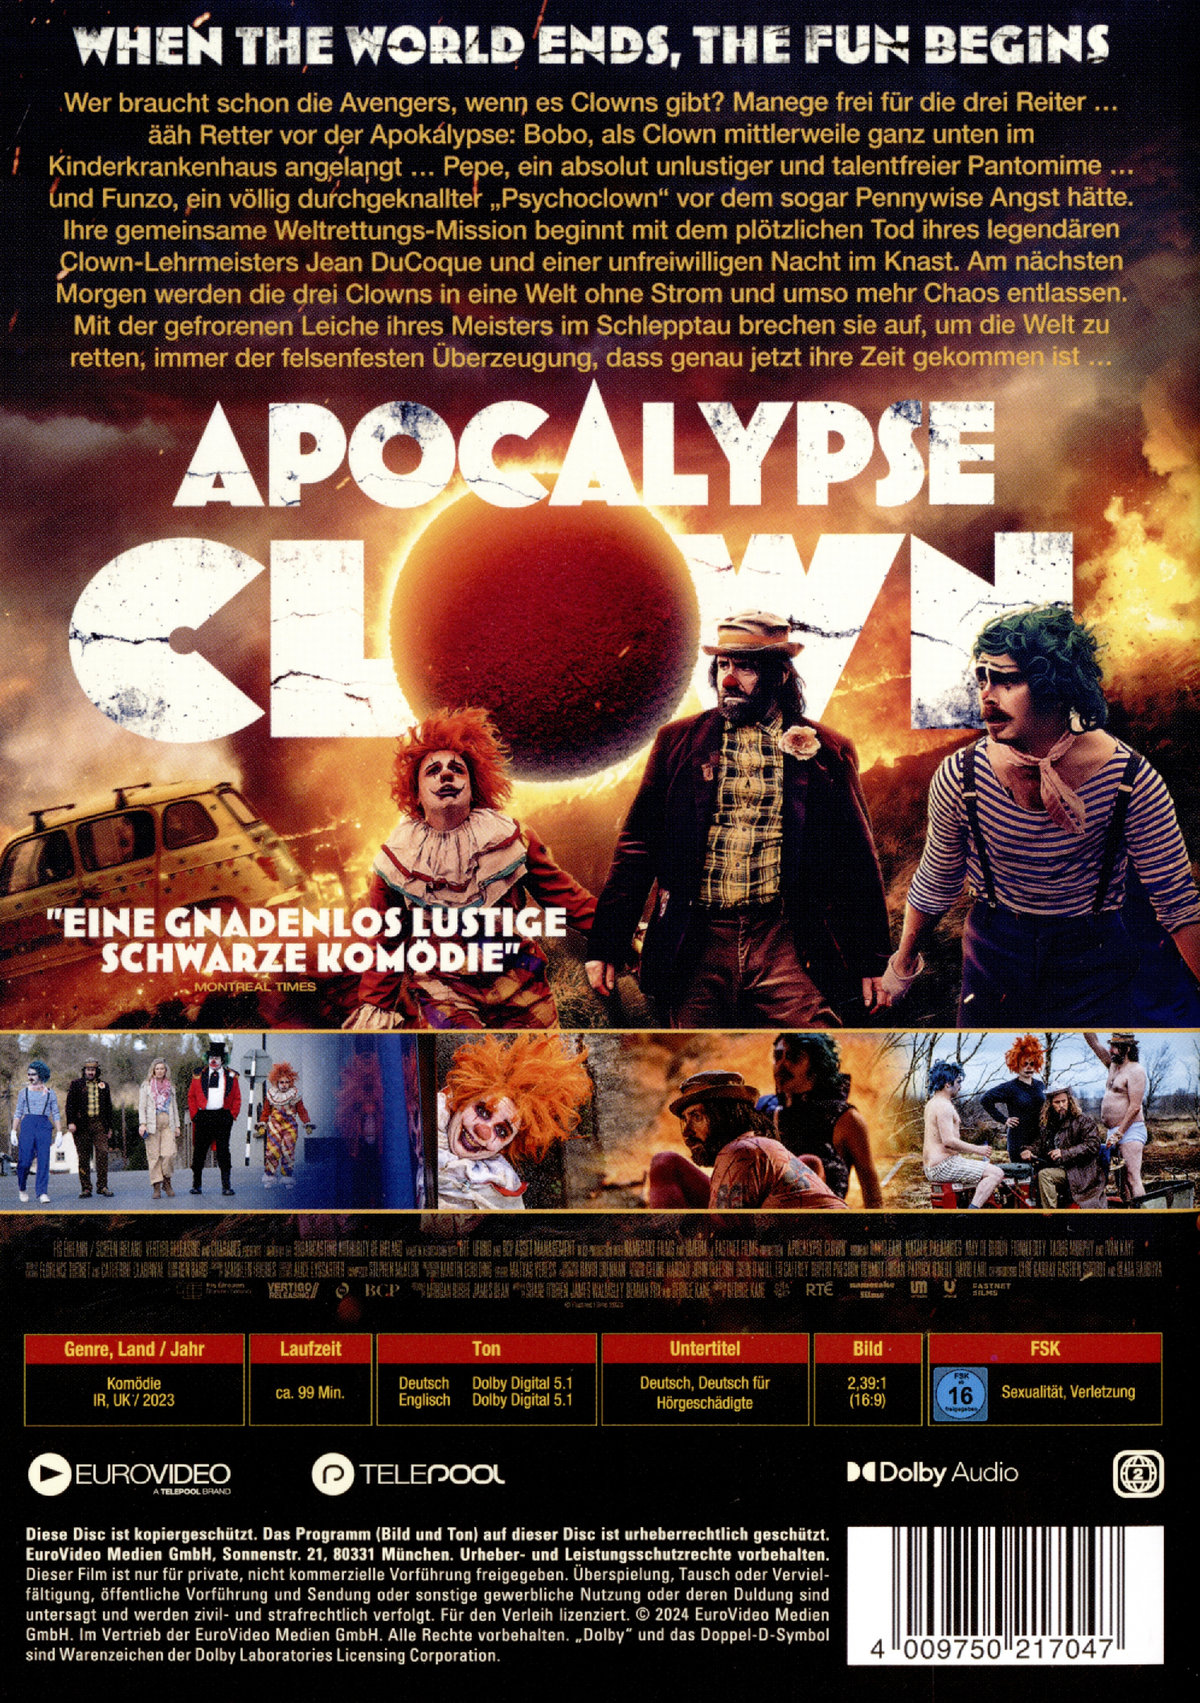 Apocalypse Clown  (DVD)